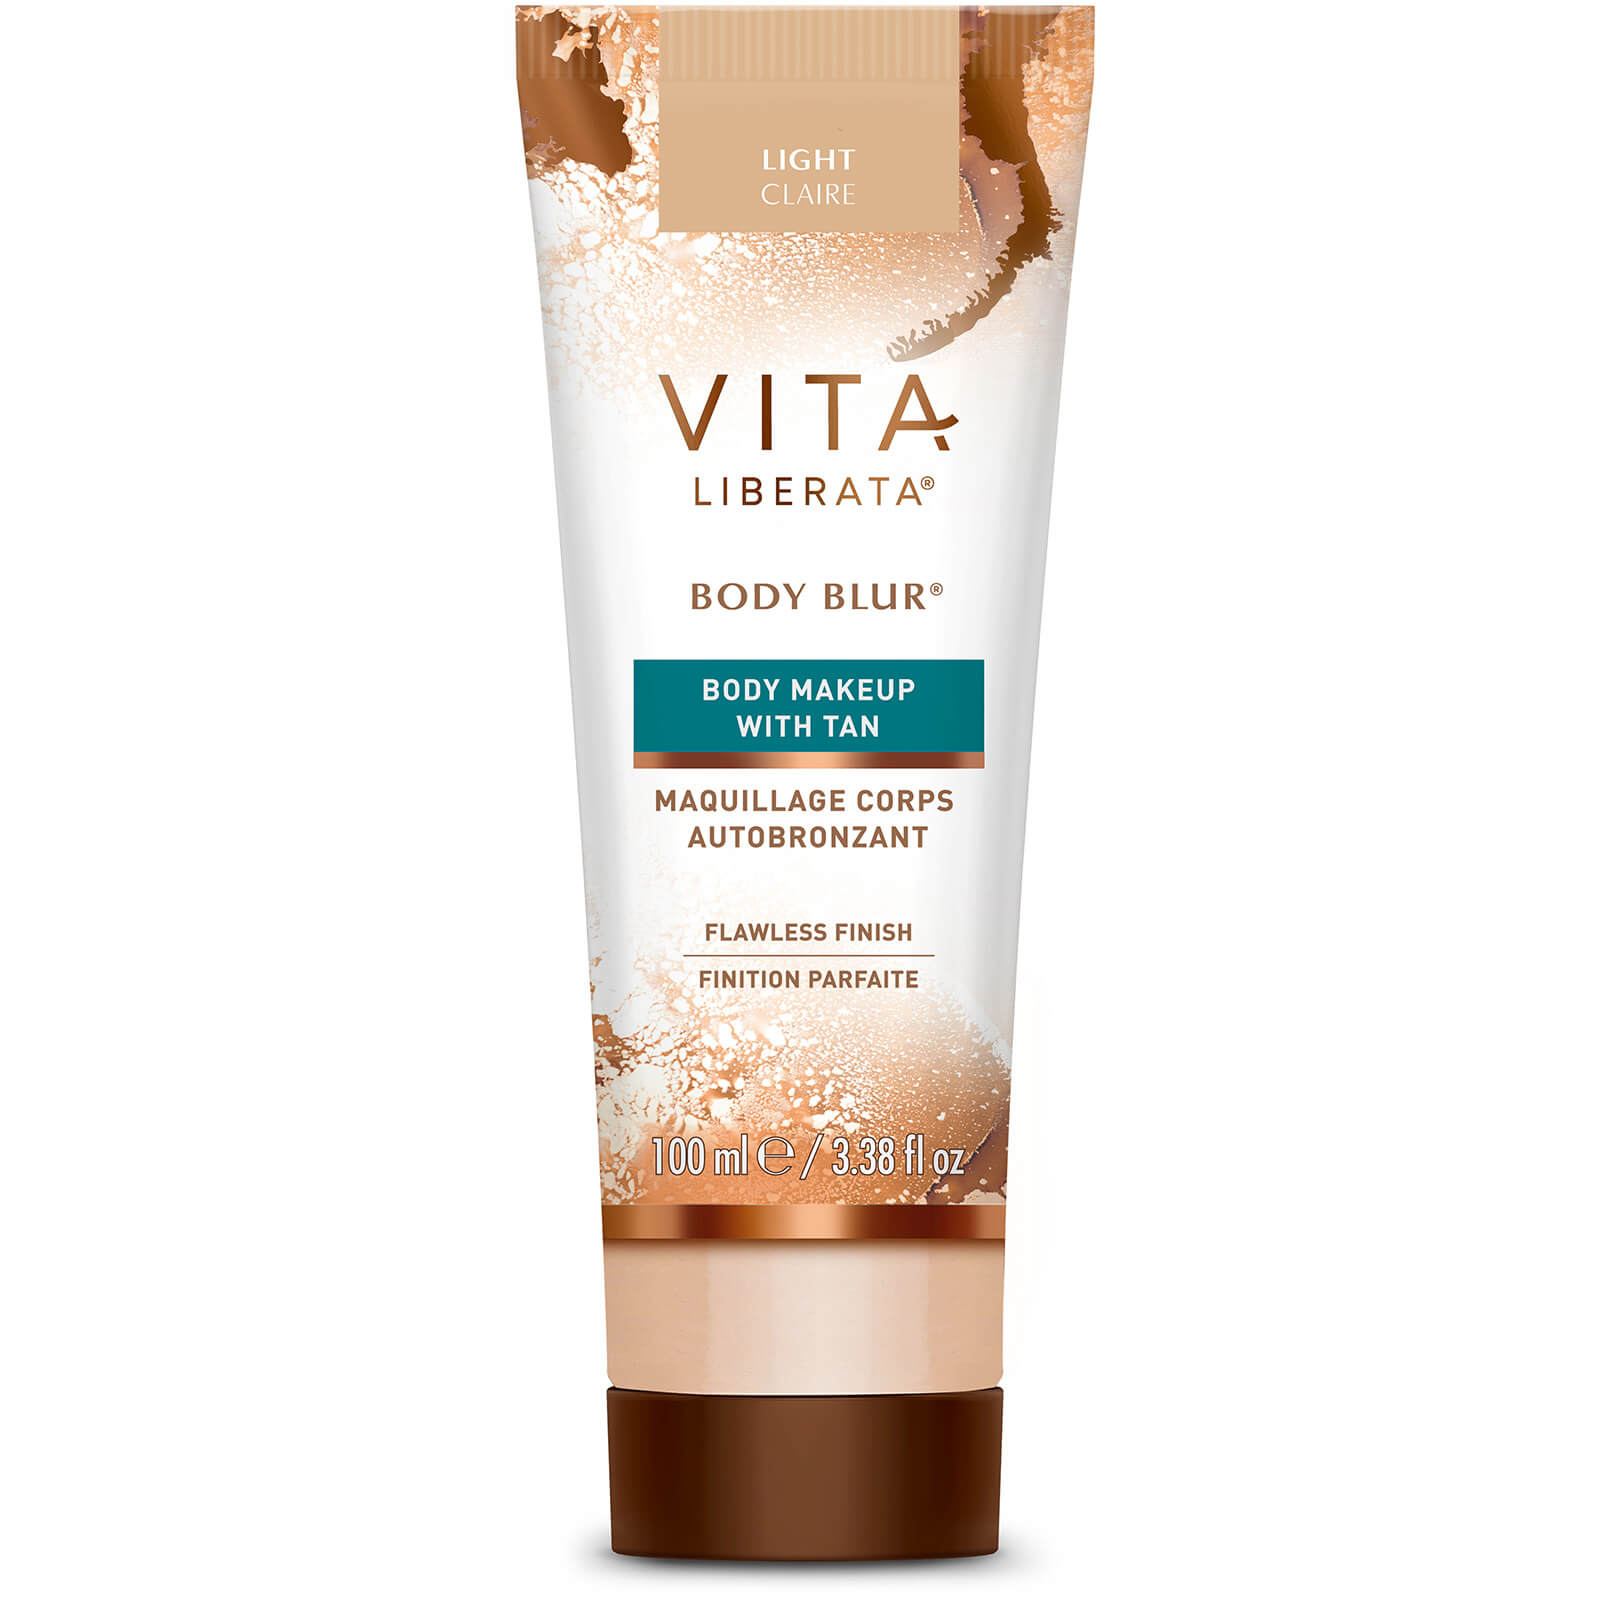 vita liberata body blur with tan 100ml (various shades) - light